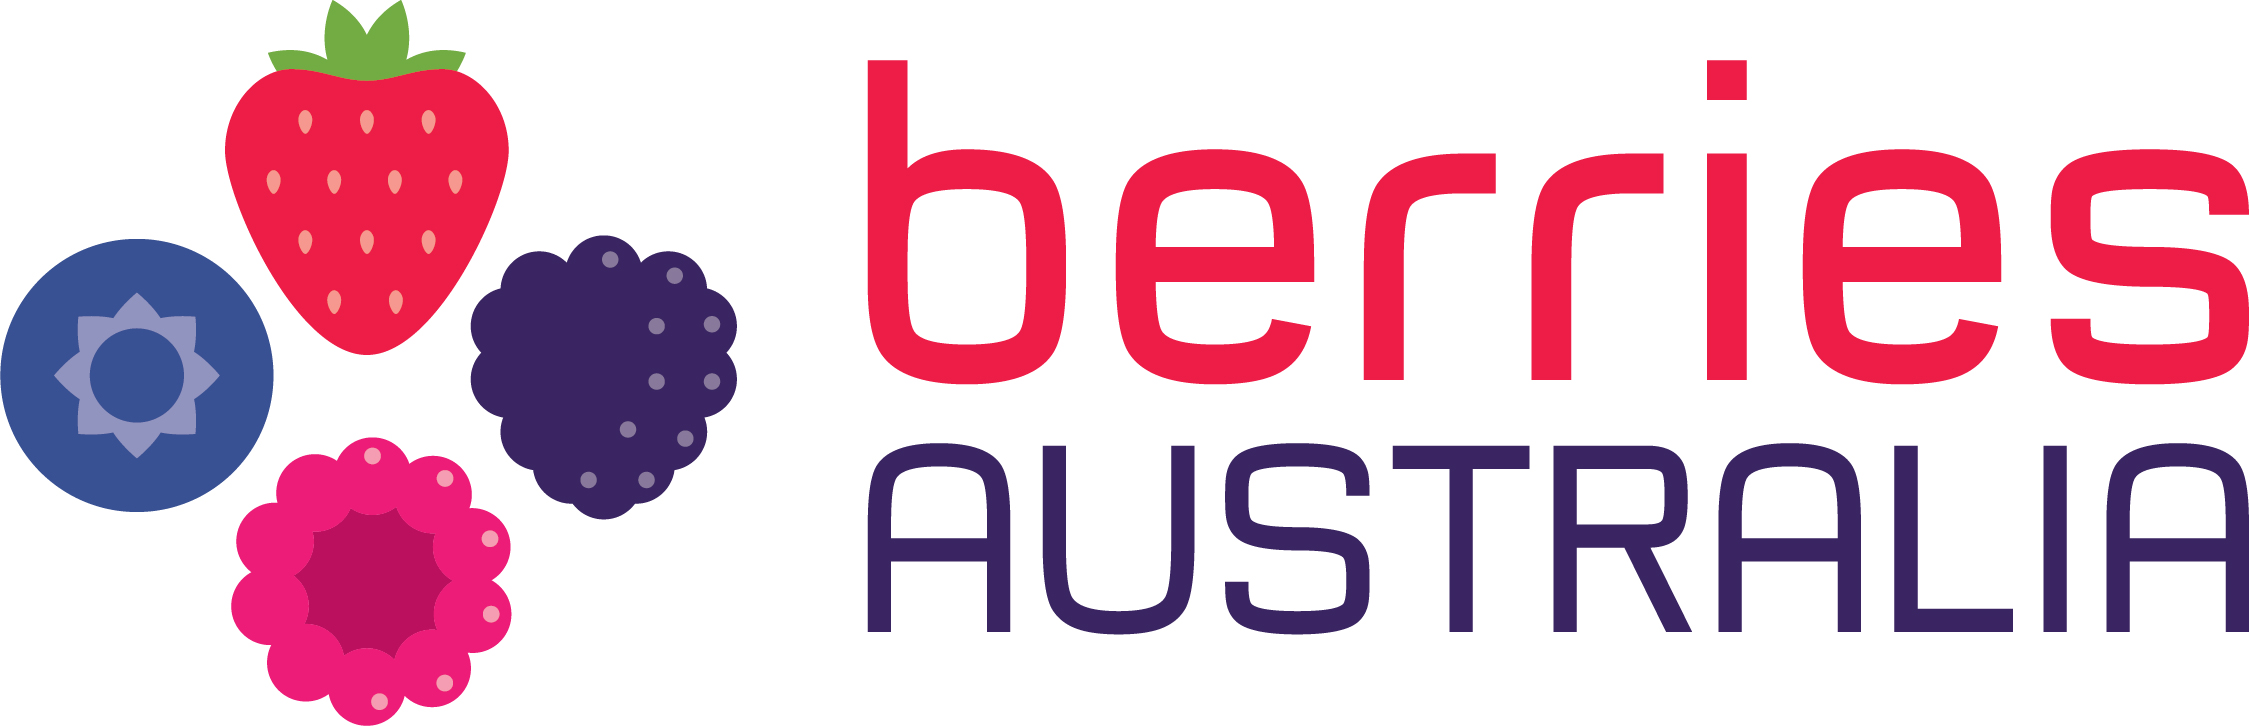 berries australia logo2